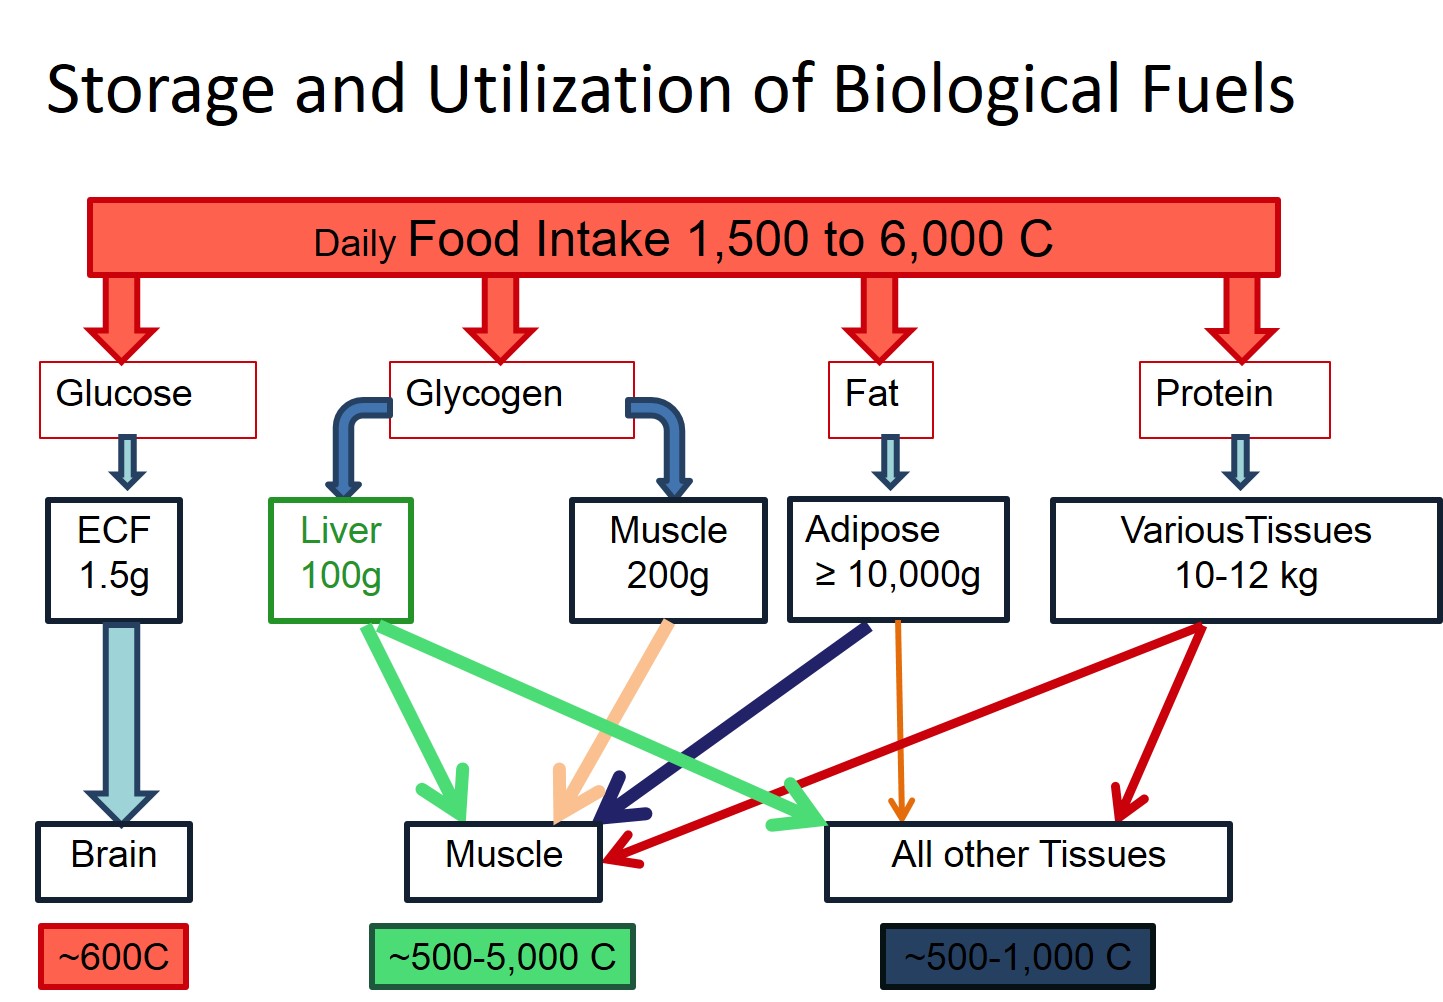 Storage and Utilization of Biological Fuels